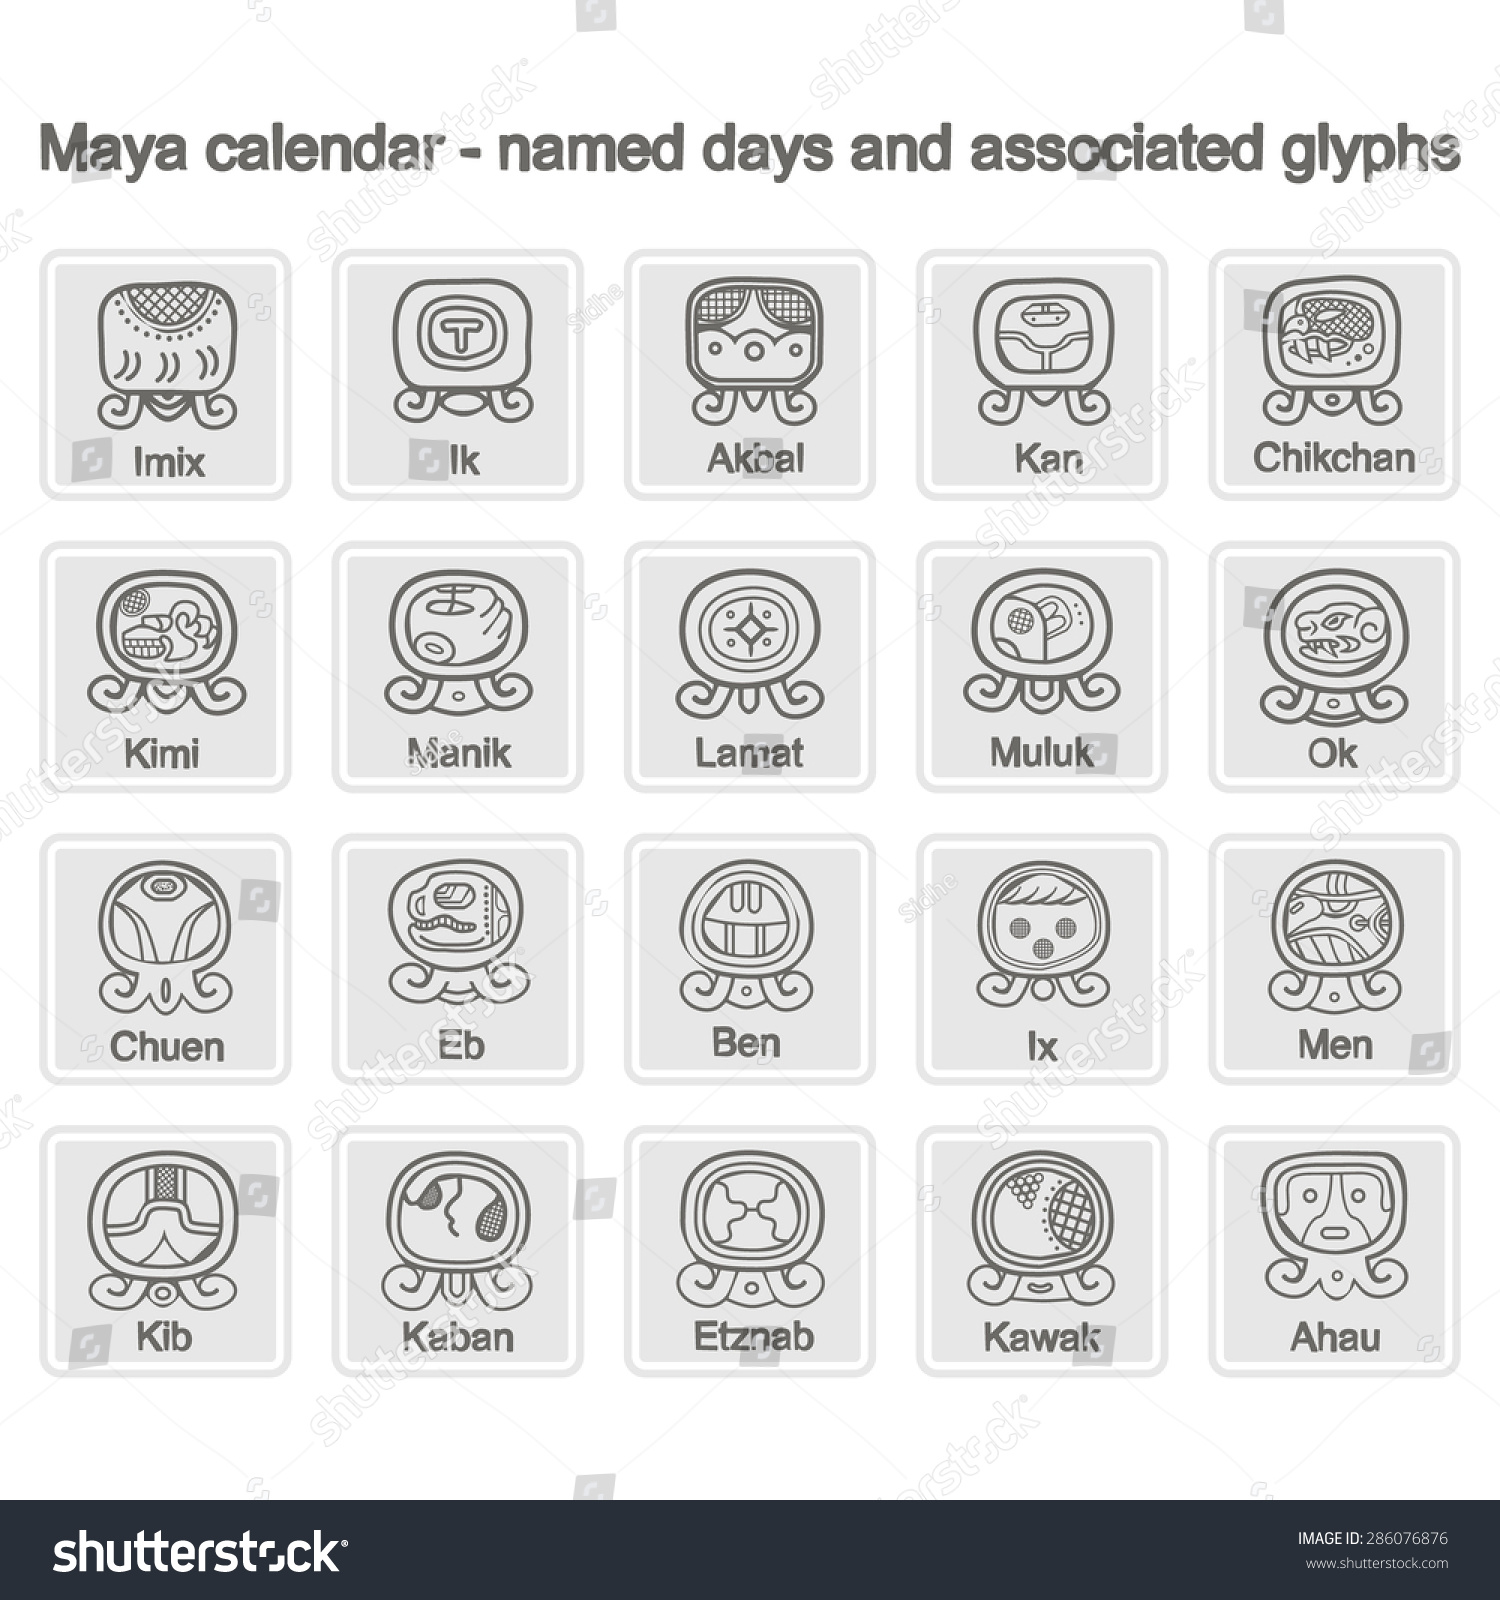 635 Mayan Calendar Glyph Images, Stock Photos & Vectors Shutterstock